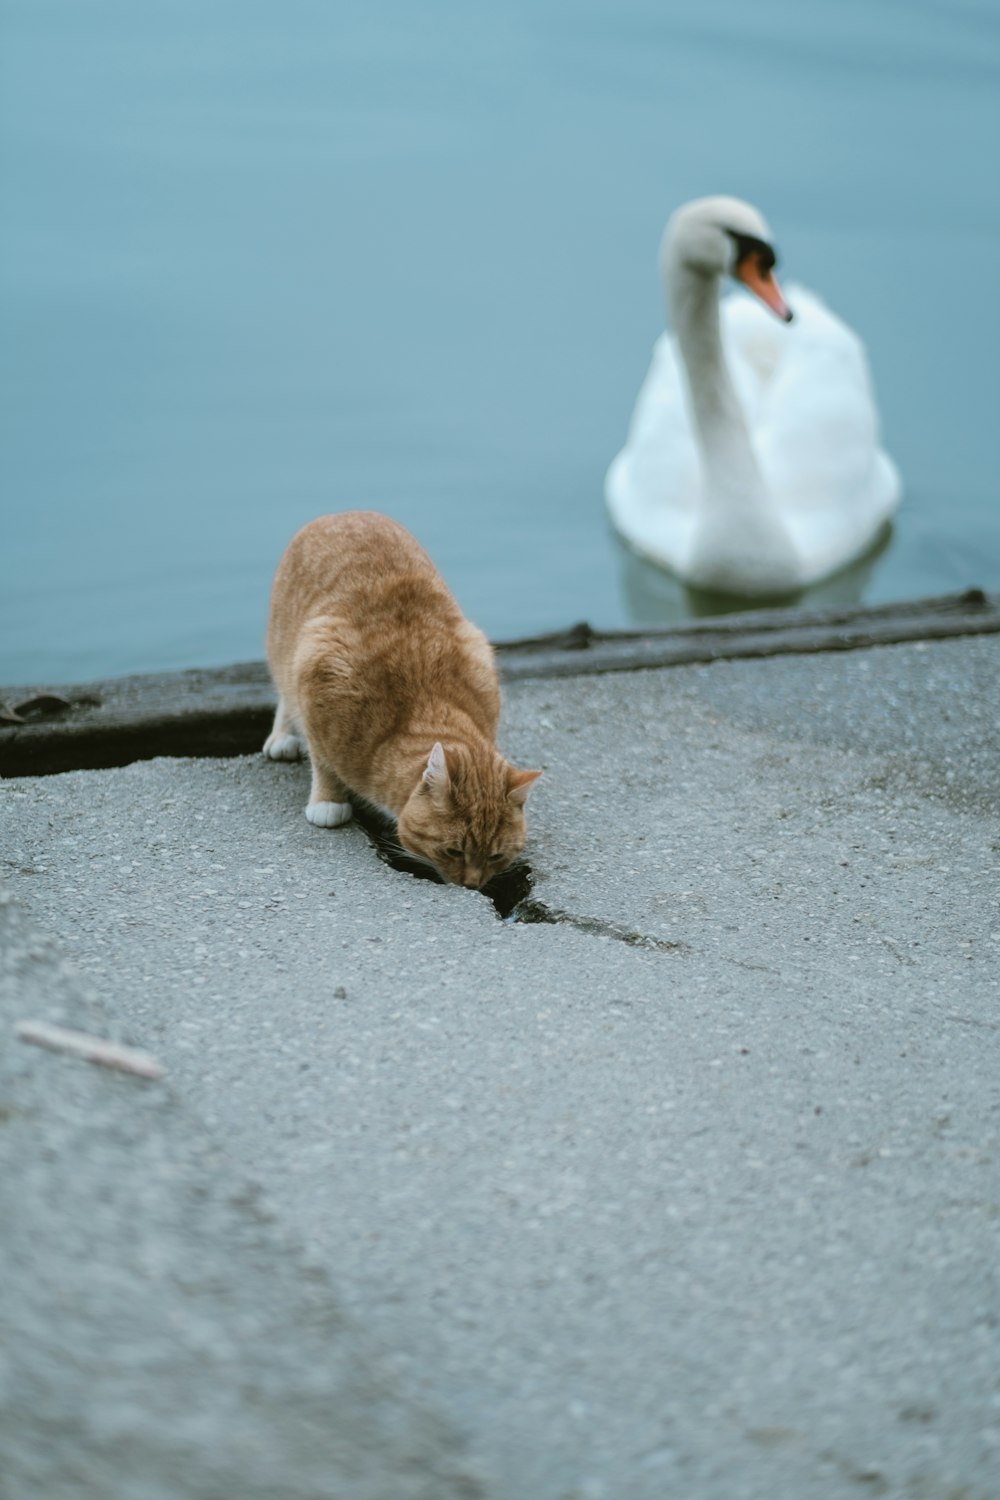 orange tabby cat near the white swan during daytime